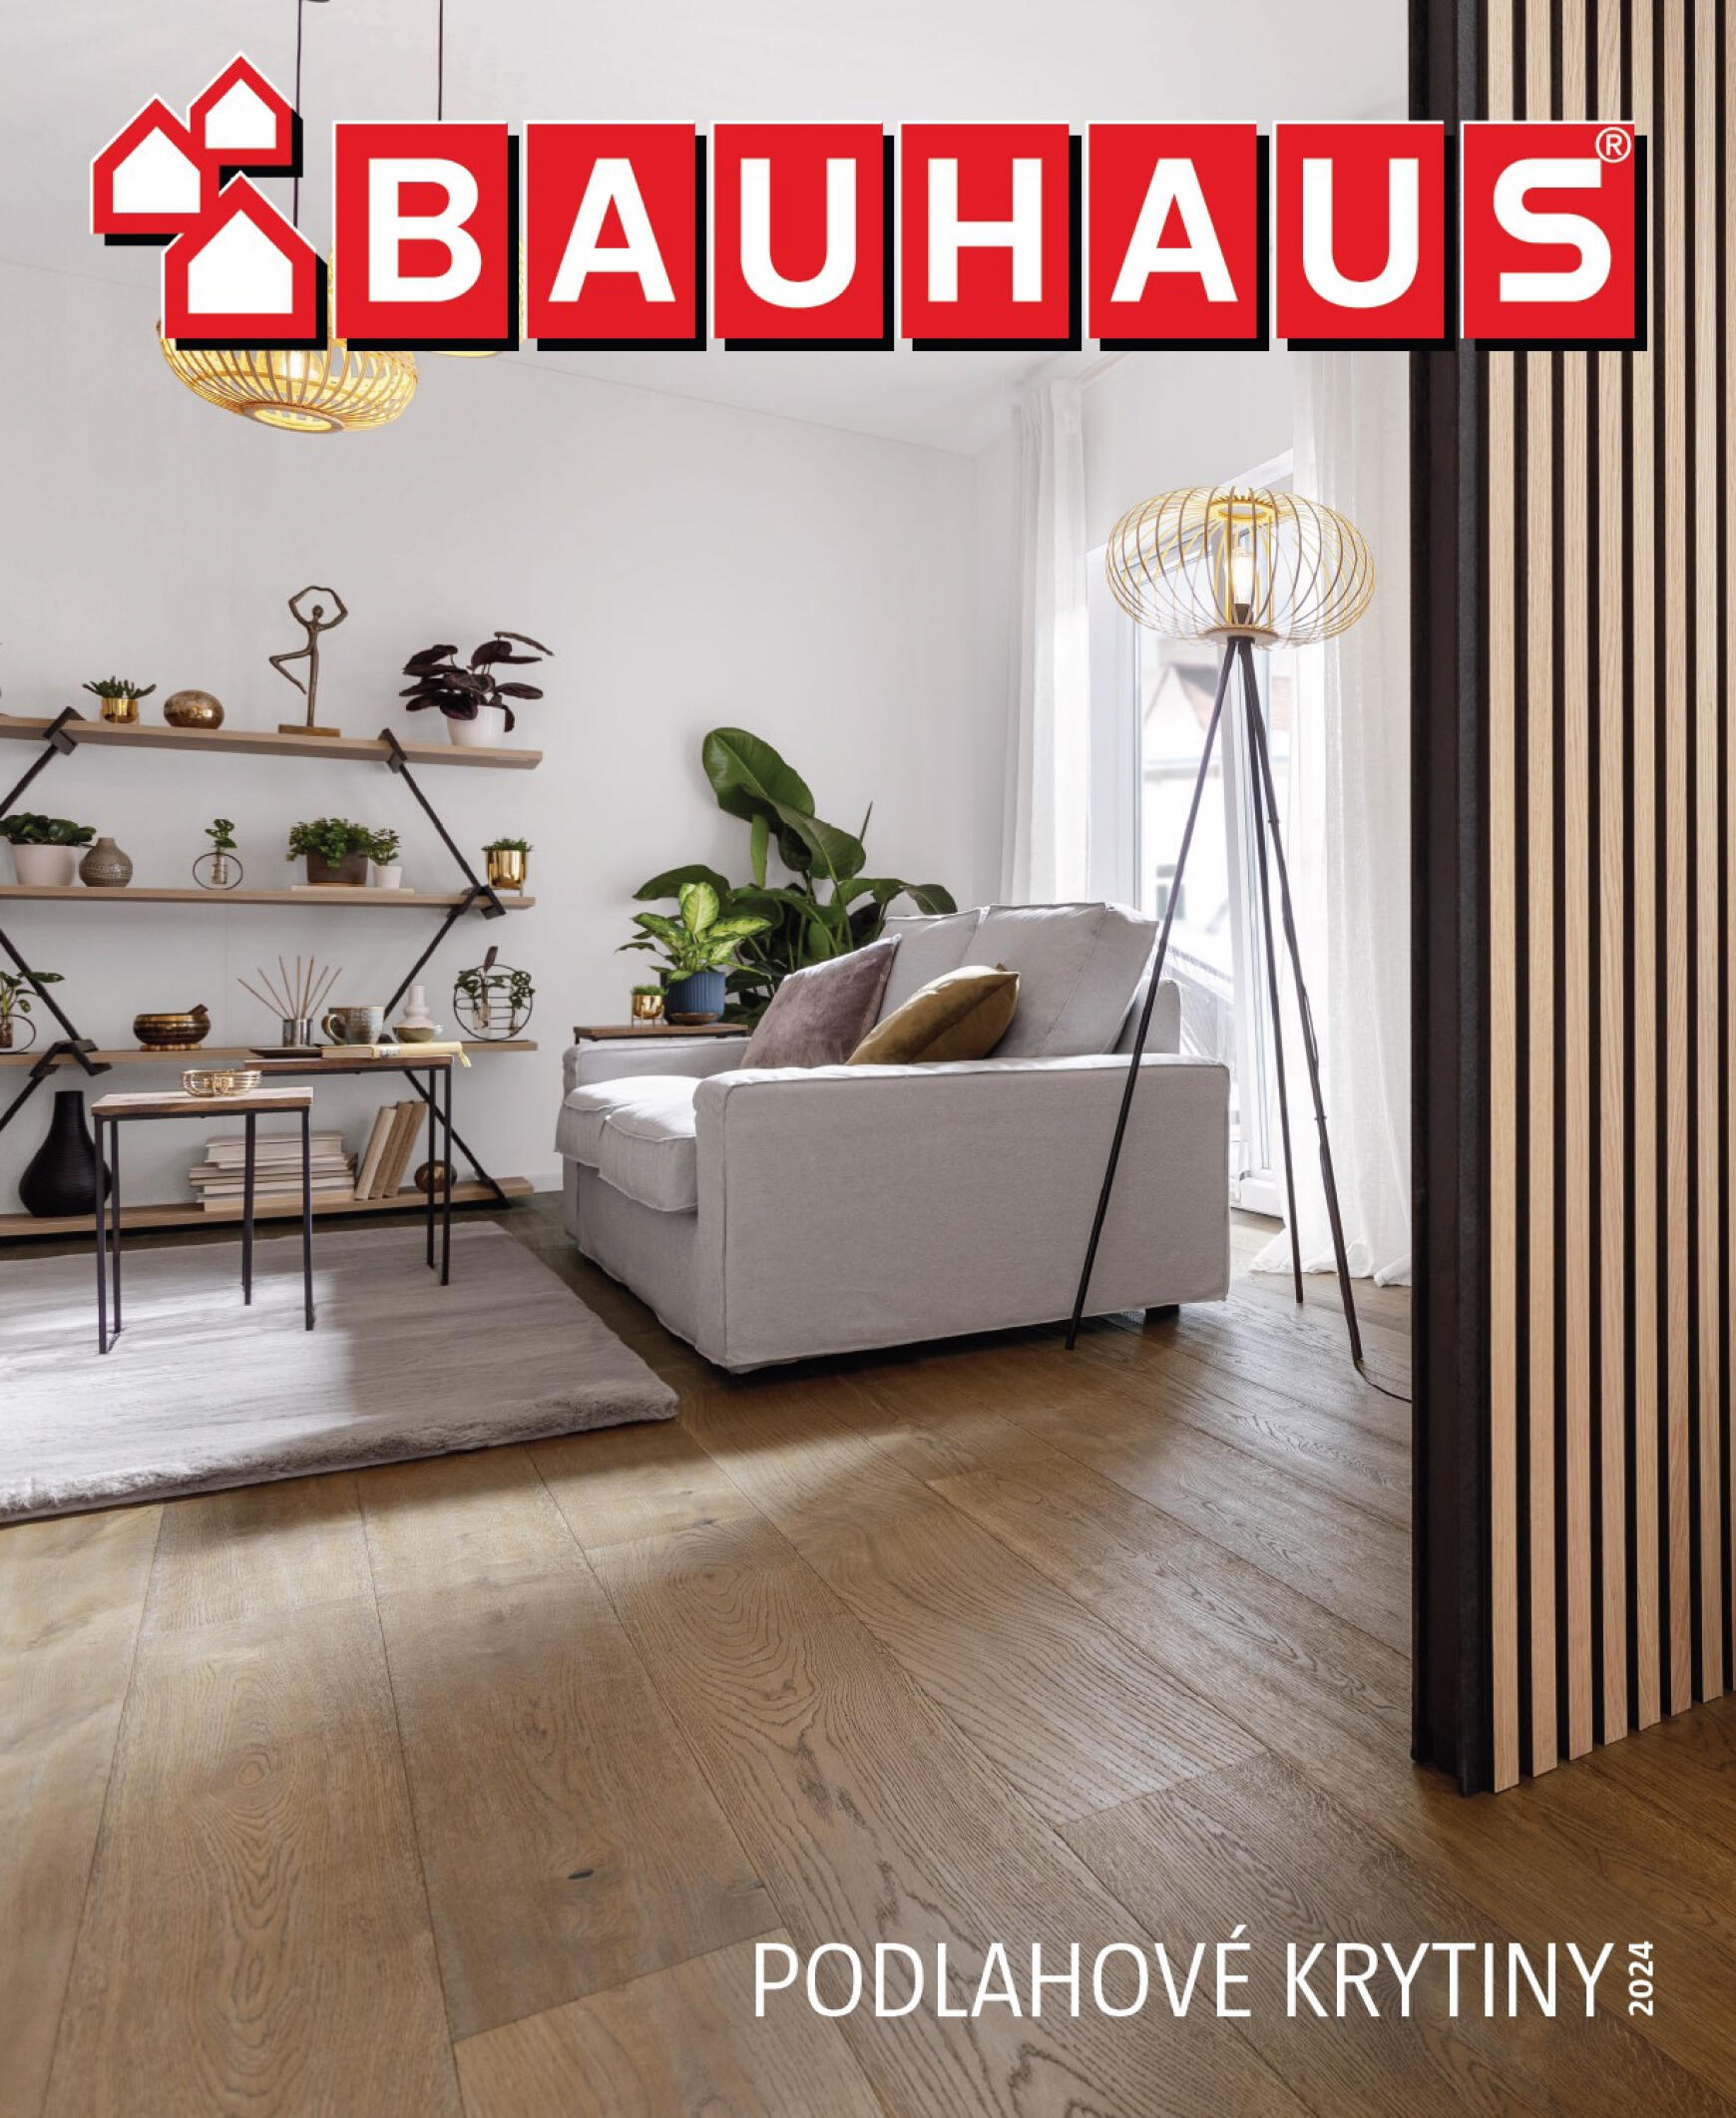 bauhaus - Leták Bauhaus - Podlahové krytiny od 23.07. do 30.11.